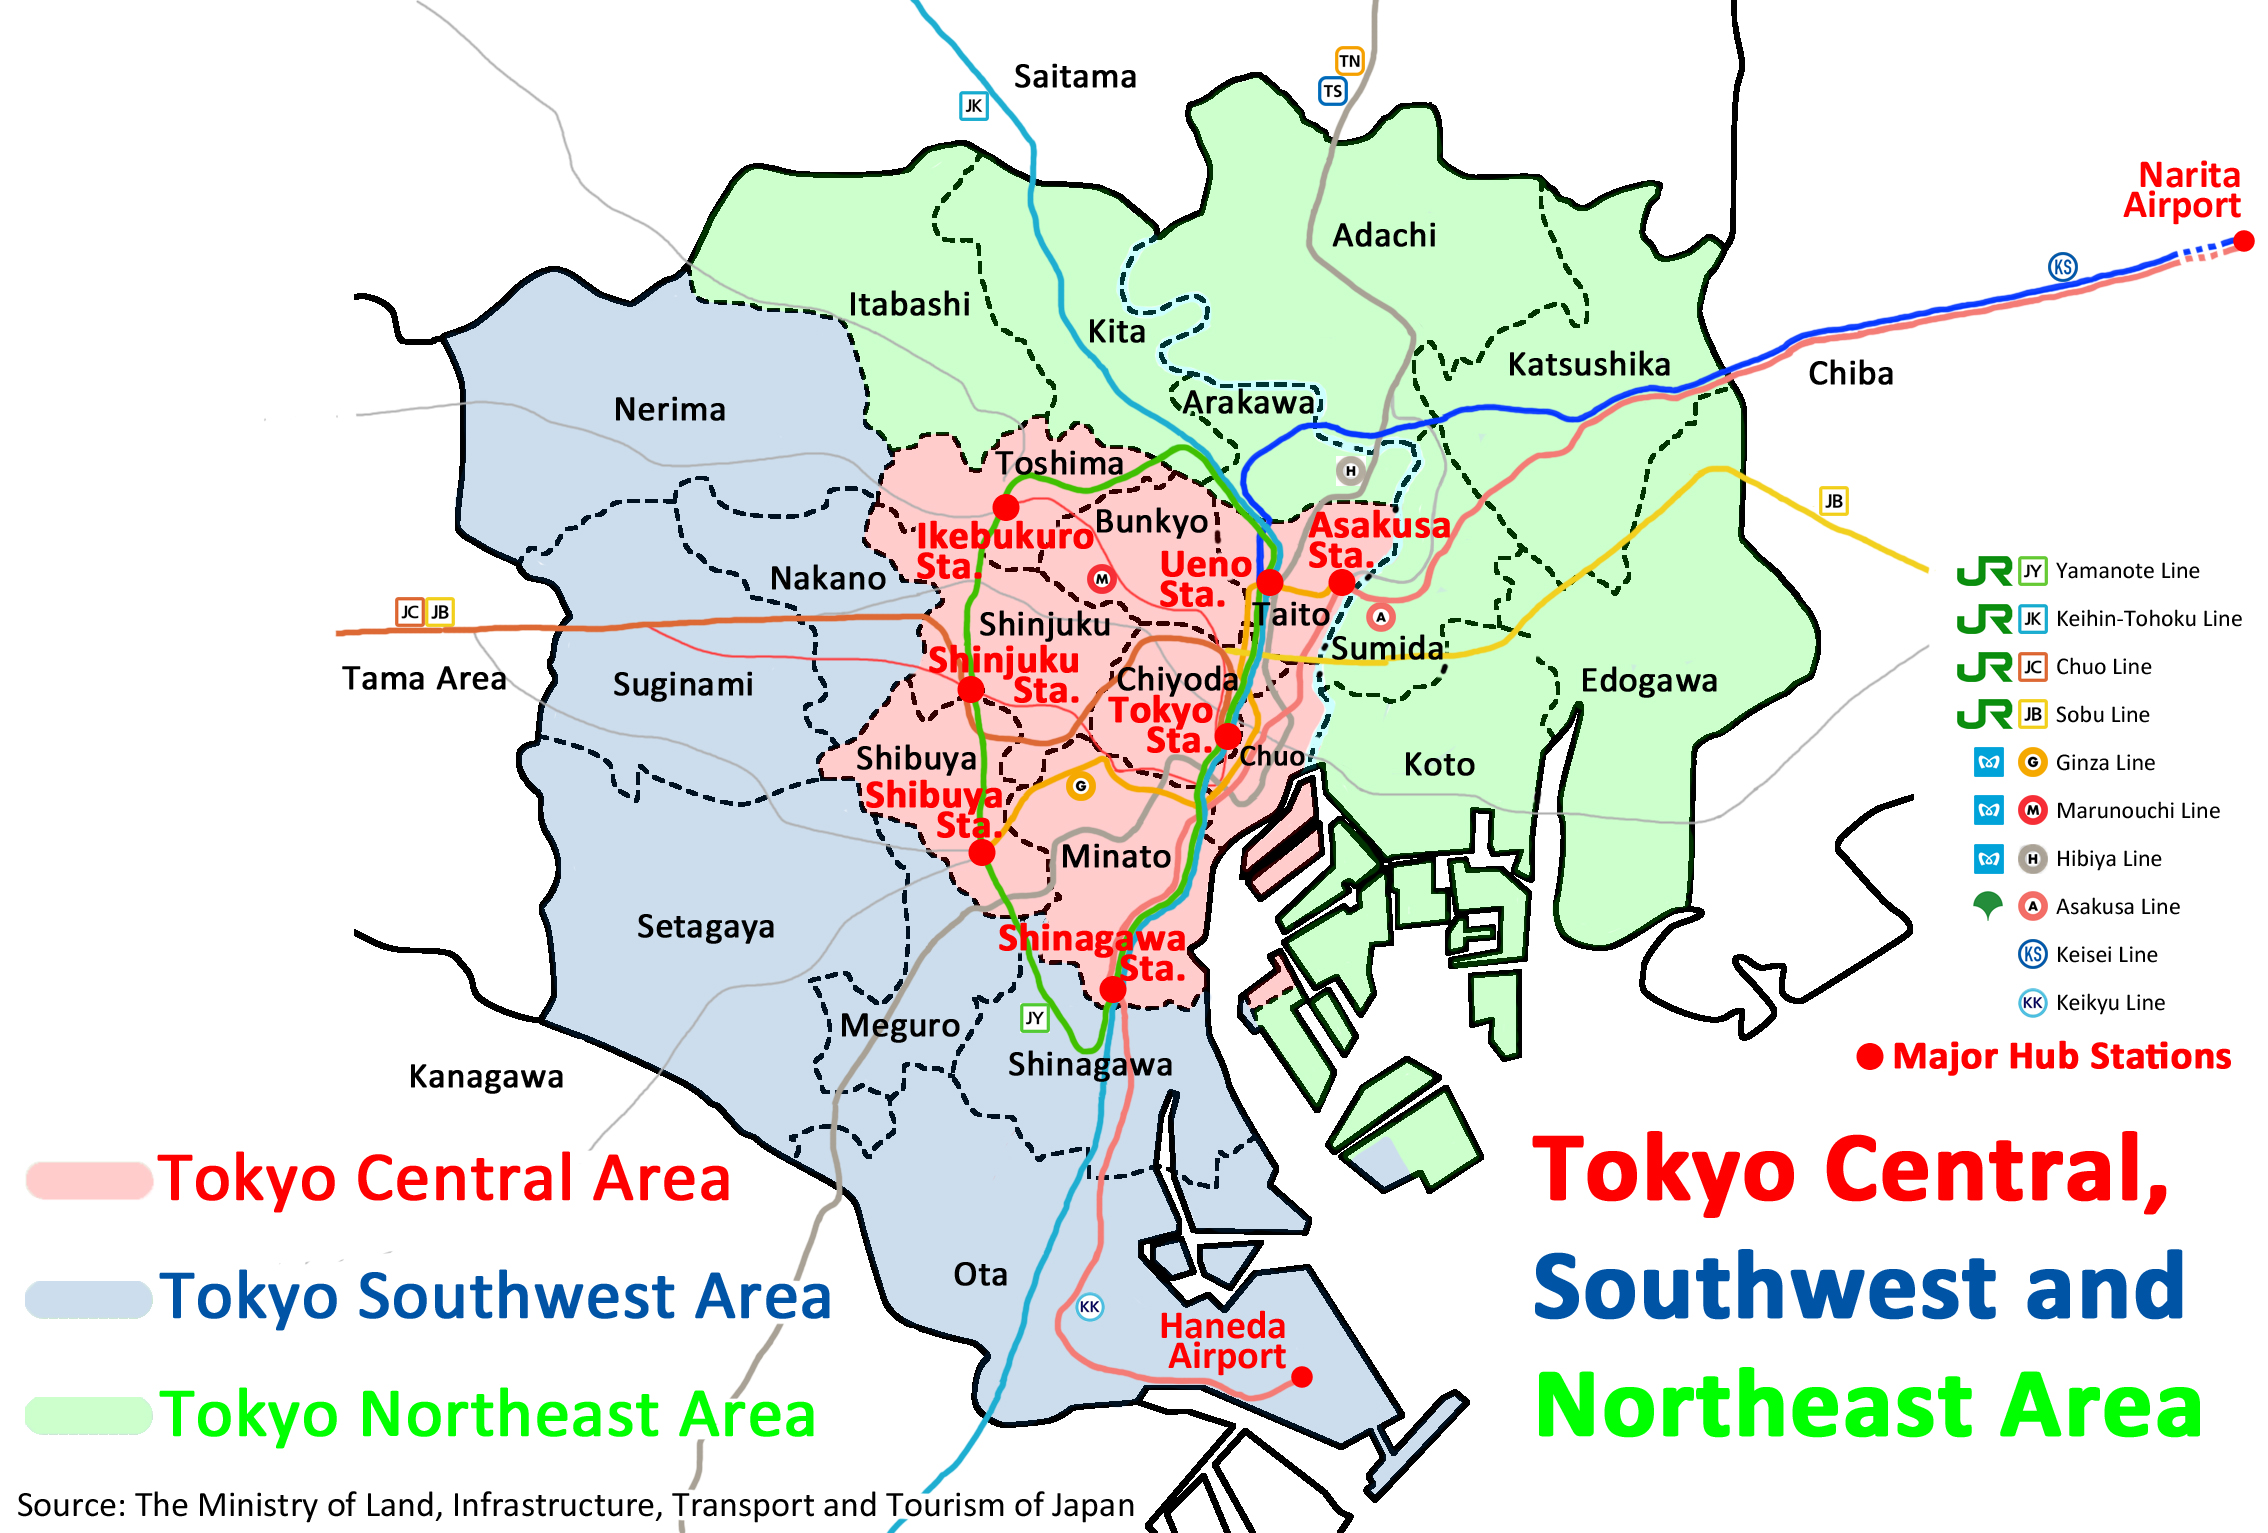 Tokyo Central Area